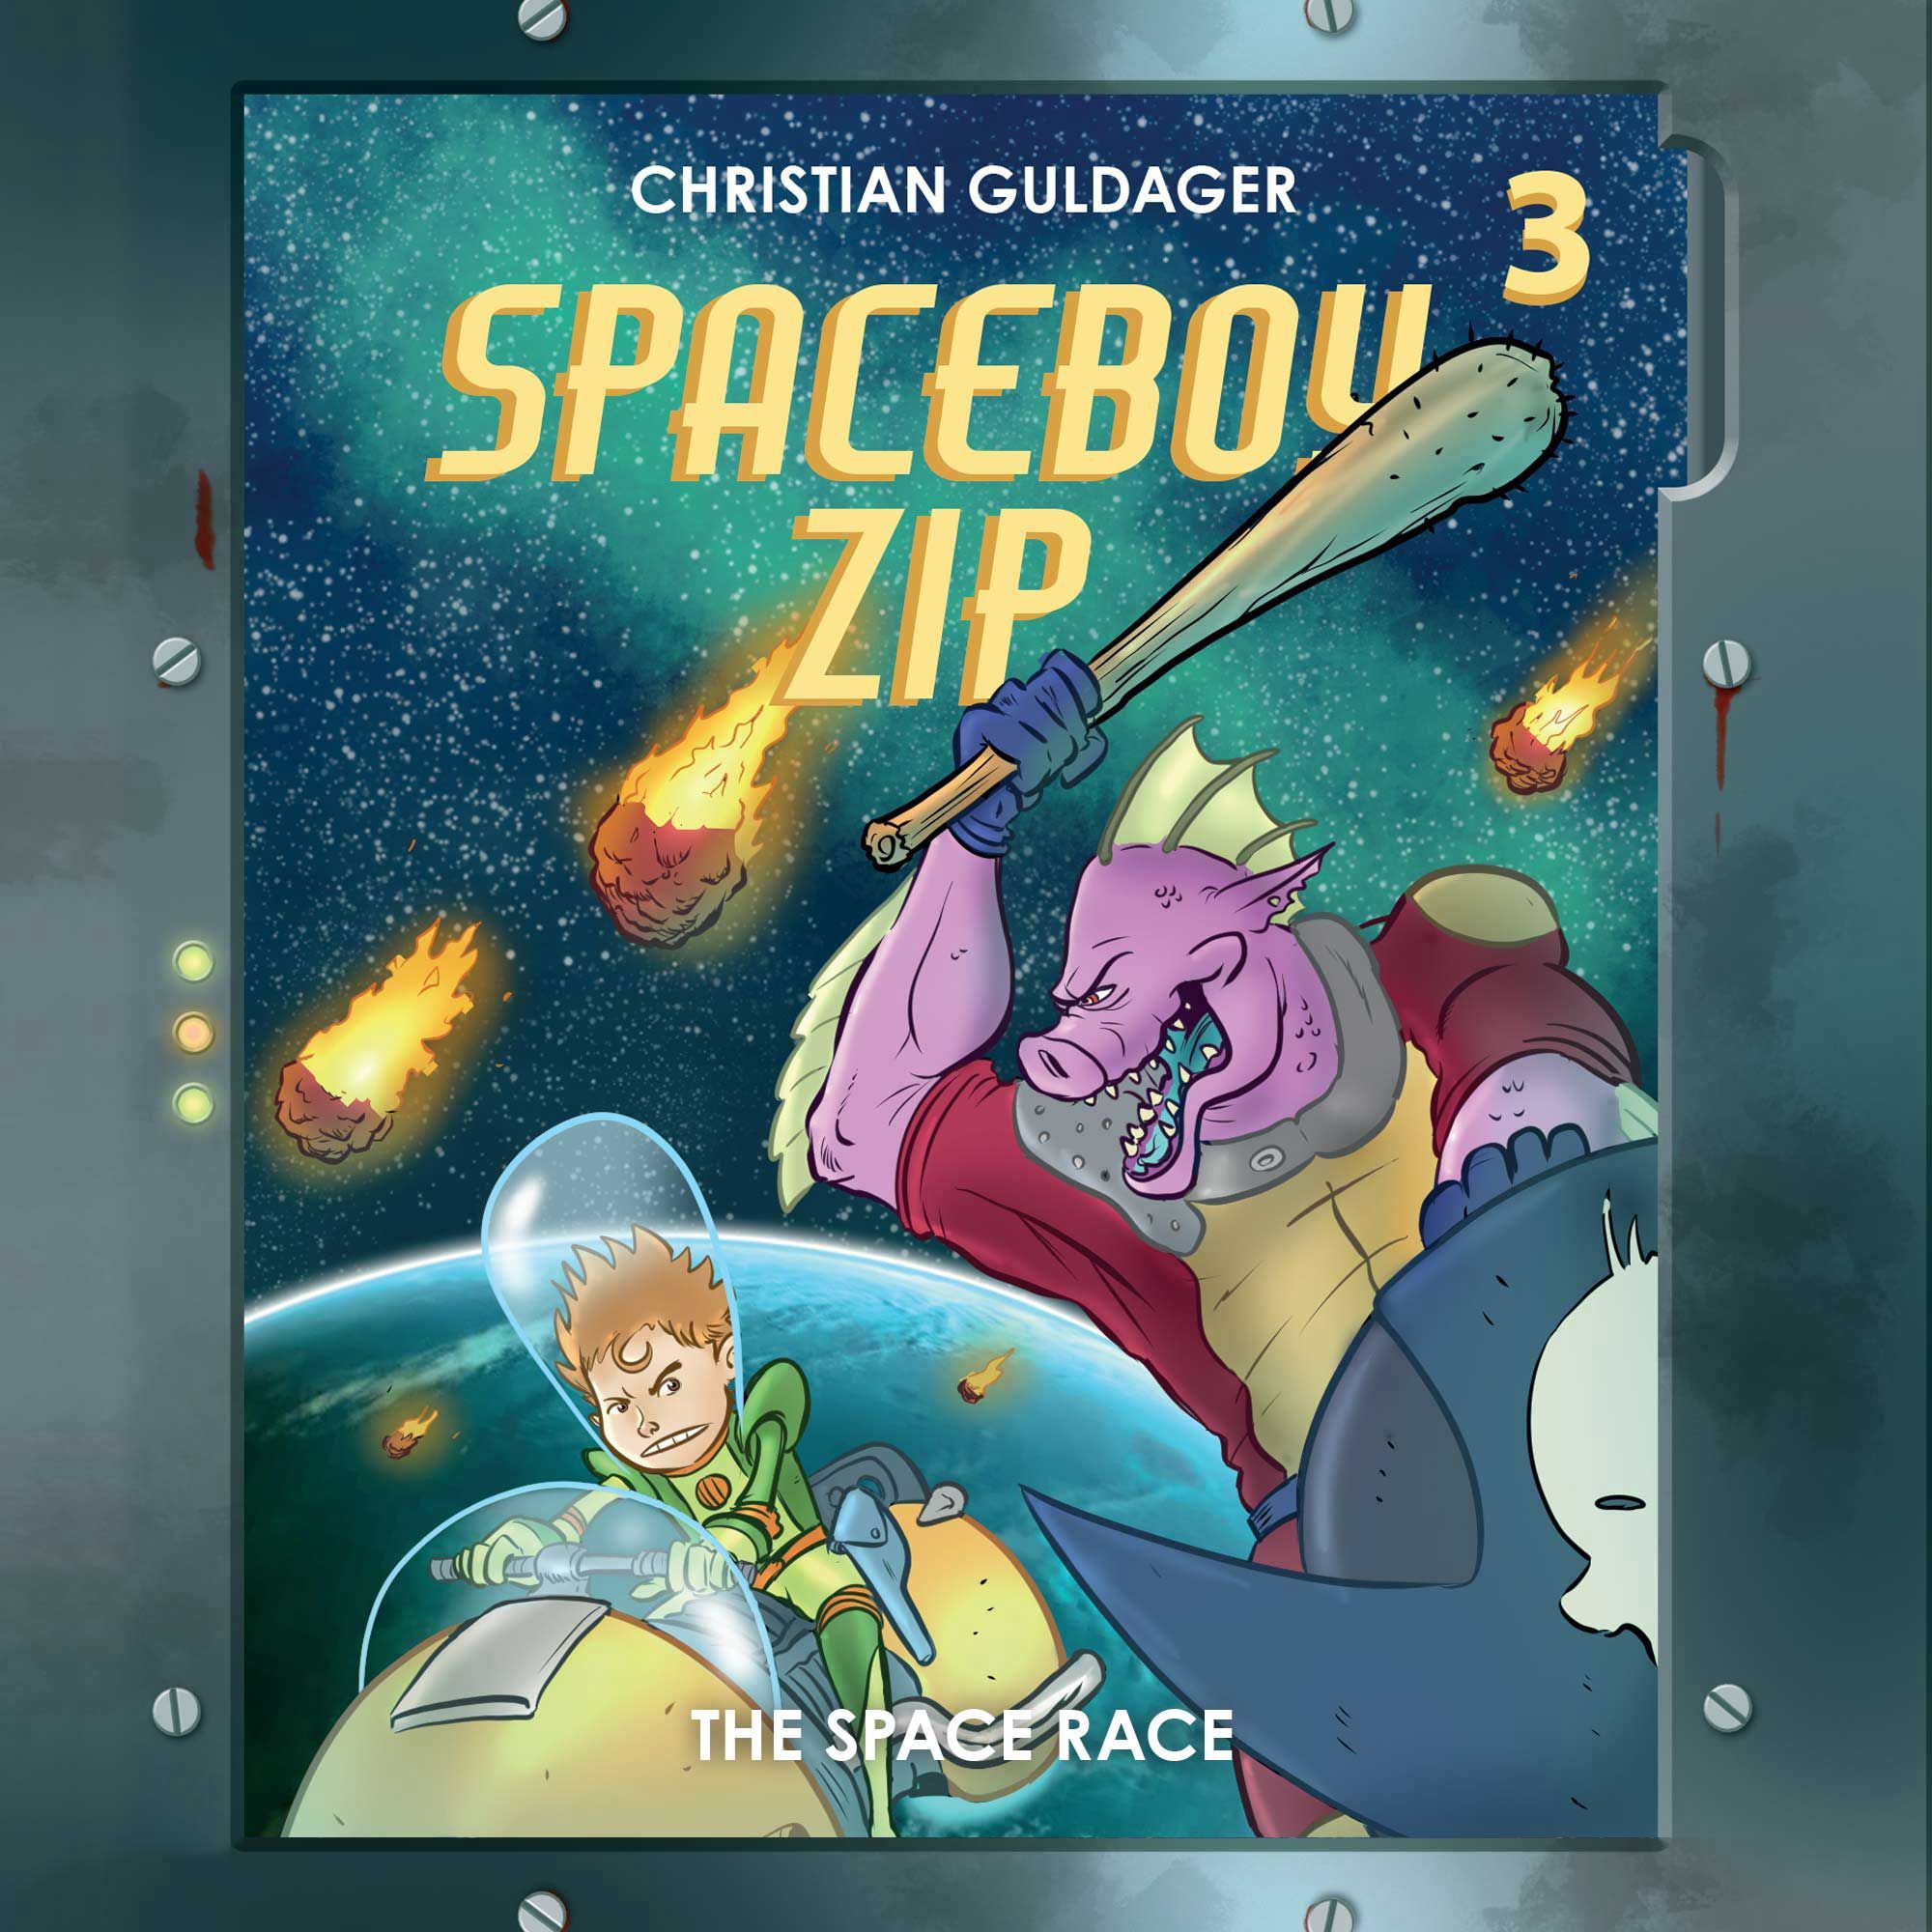 Spaceboy Zip #3: The Space Race, ljudbok av Christian Guldager